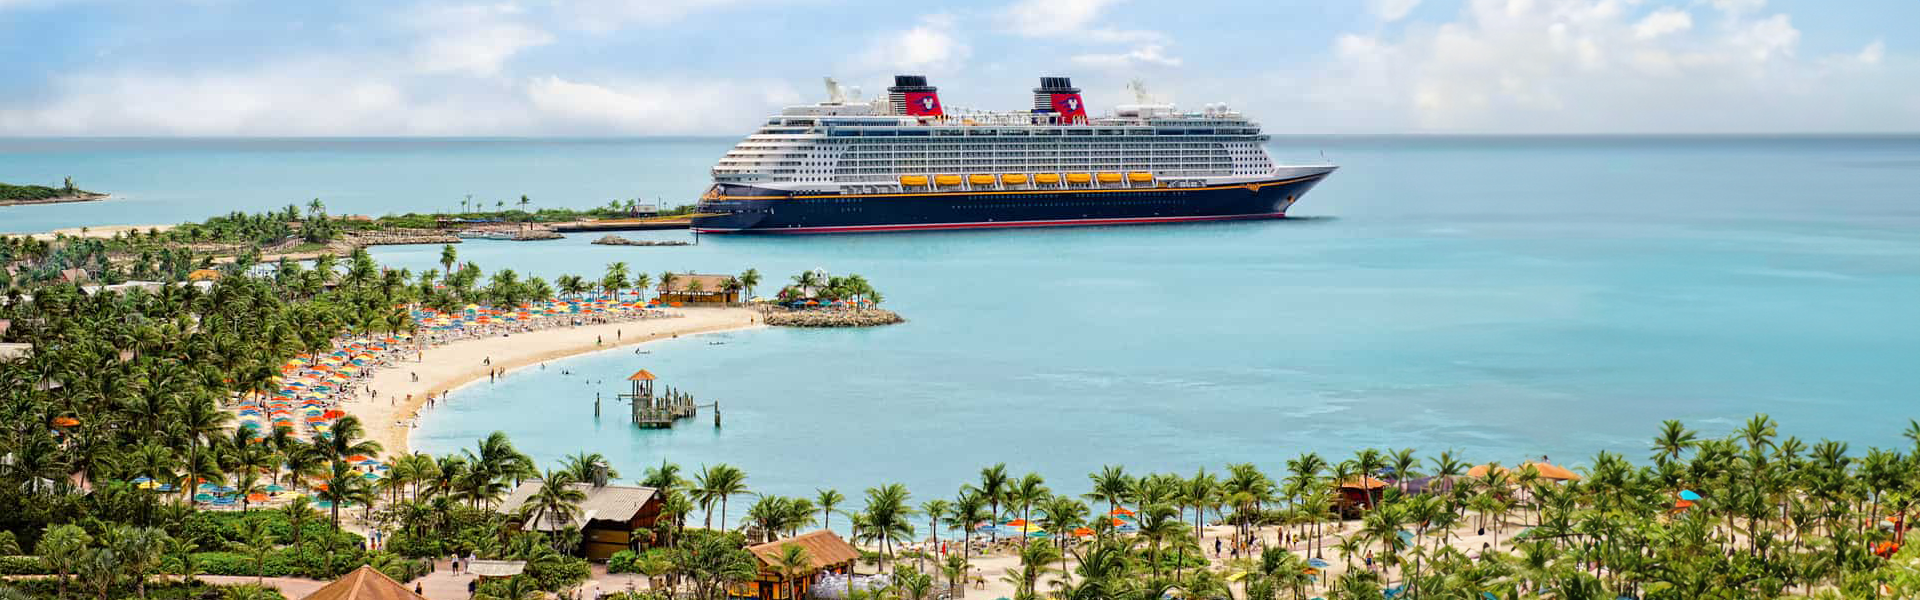 Caribe fabulosos con Disney Cruise Line